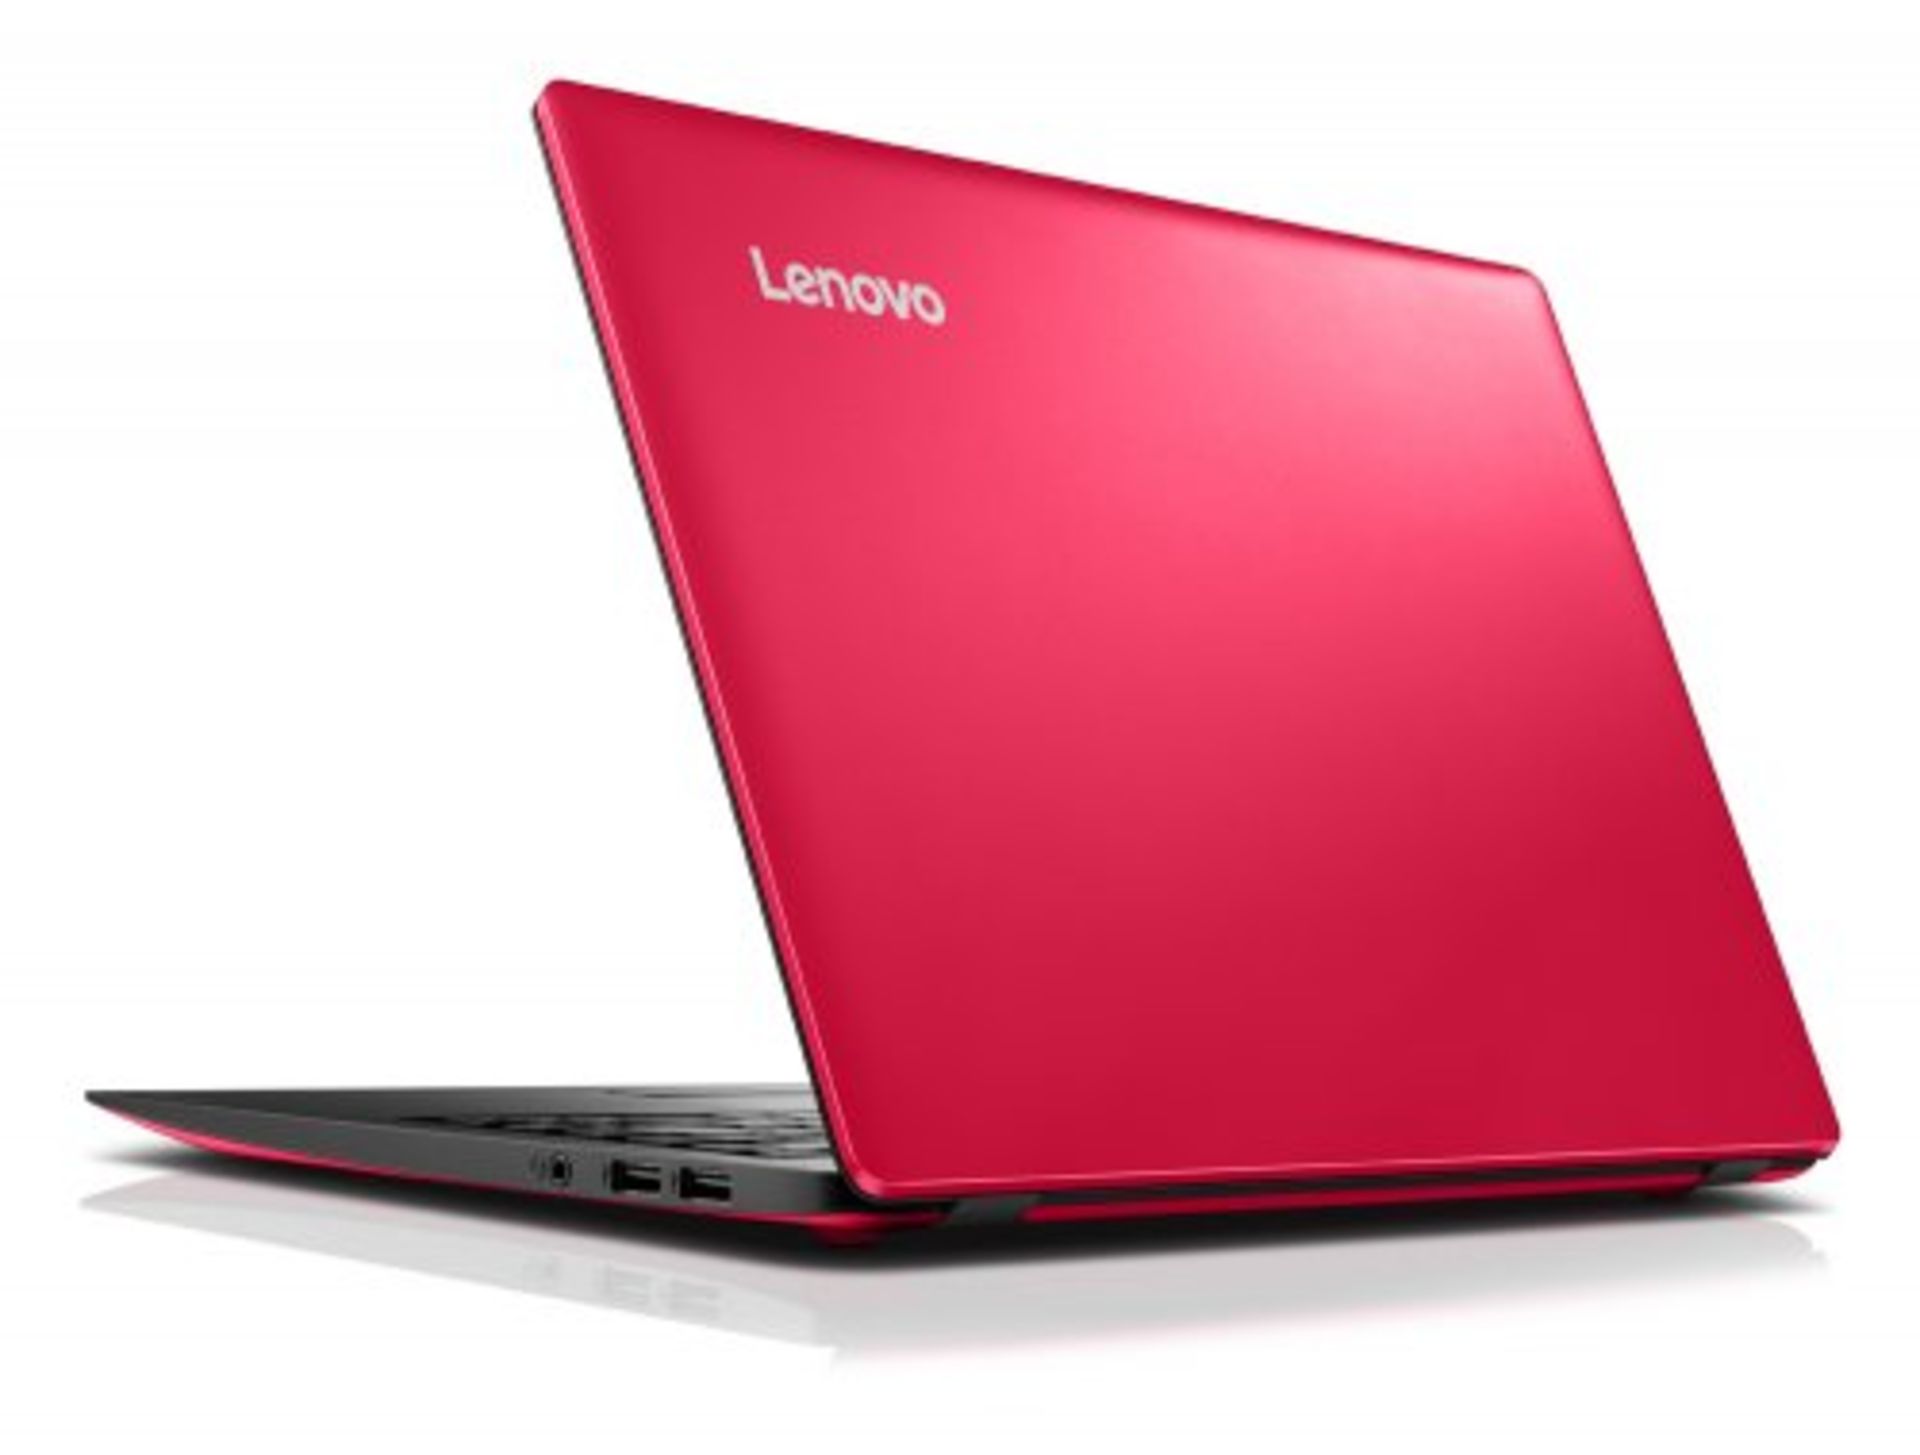 V Grade A Lenovo 14" Laptop - Intel Celeron N3050 1.6GHz Processor - 32GB - 2GB RAM - Windows 10 - Image 2 of 2